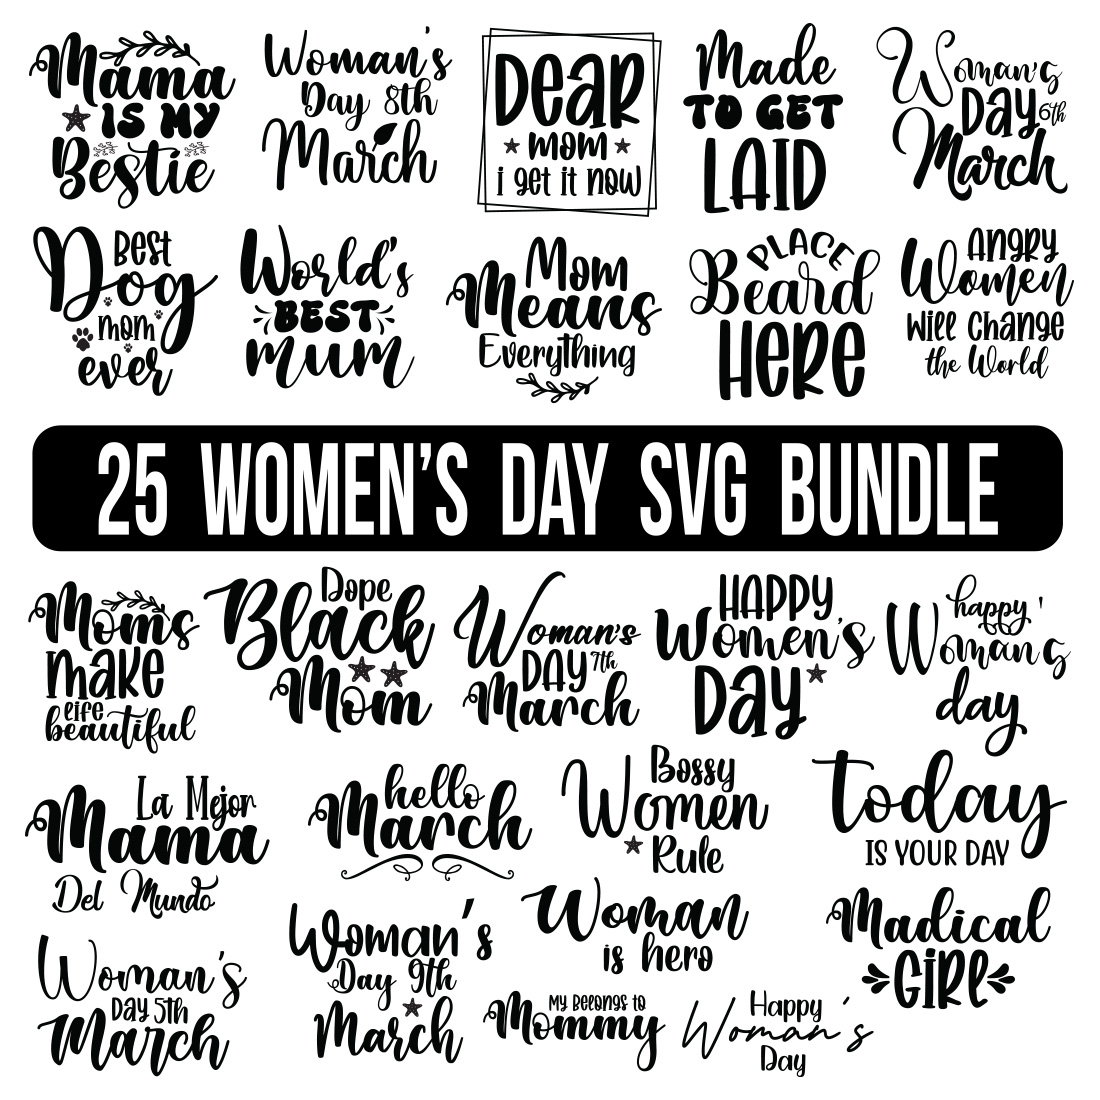 Women's Day SVG Bundle, Women's Day SVG designs, Girl power designs, SVG files, Digital downloads, cover image.